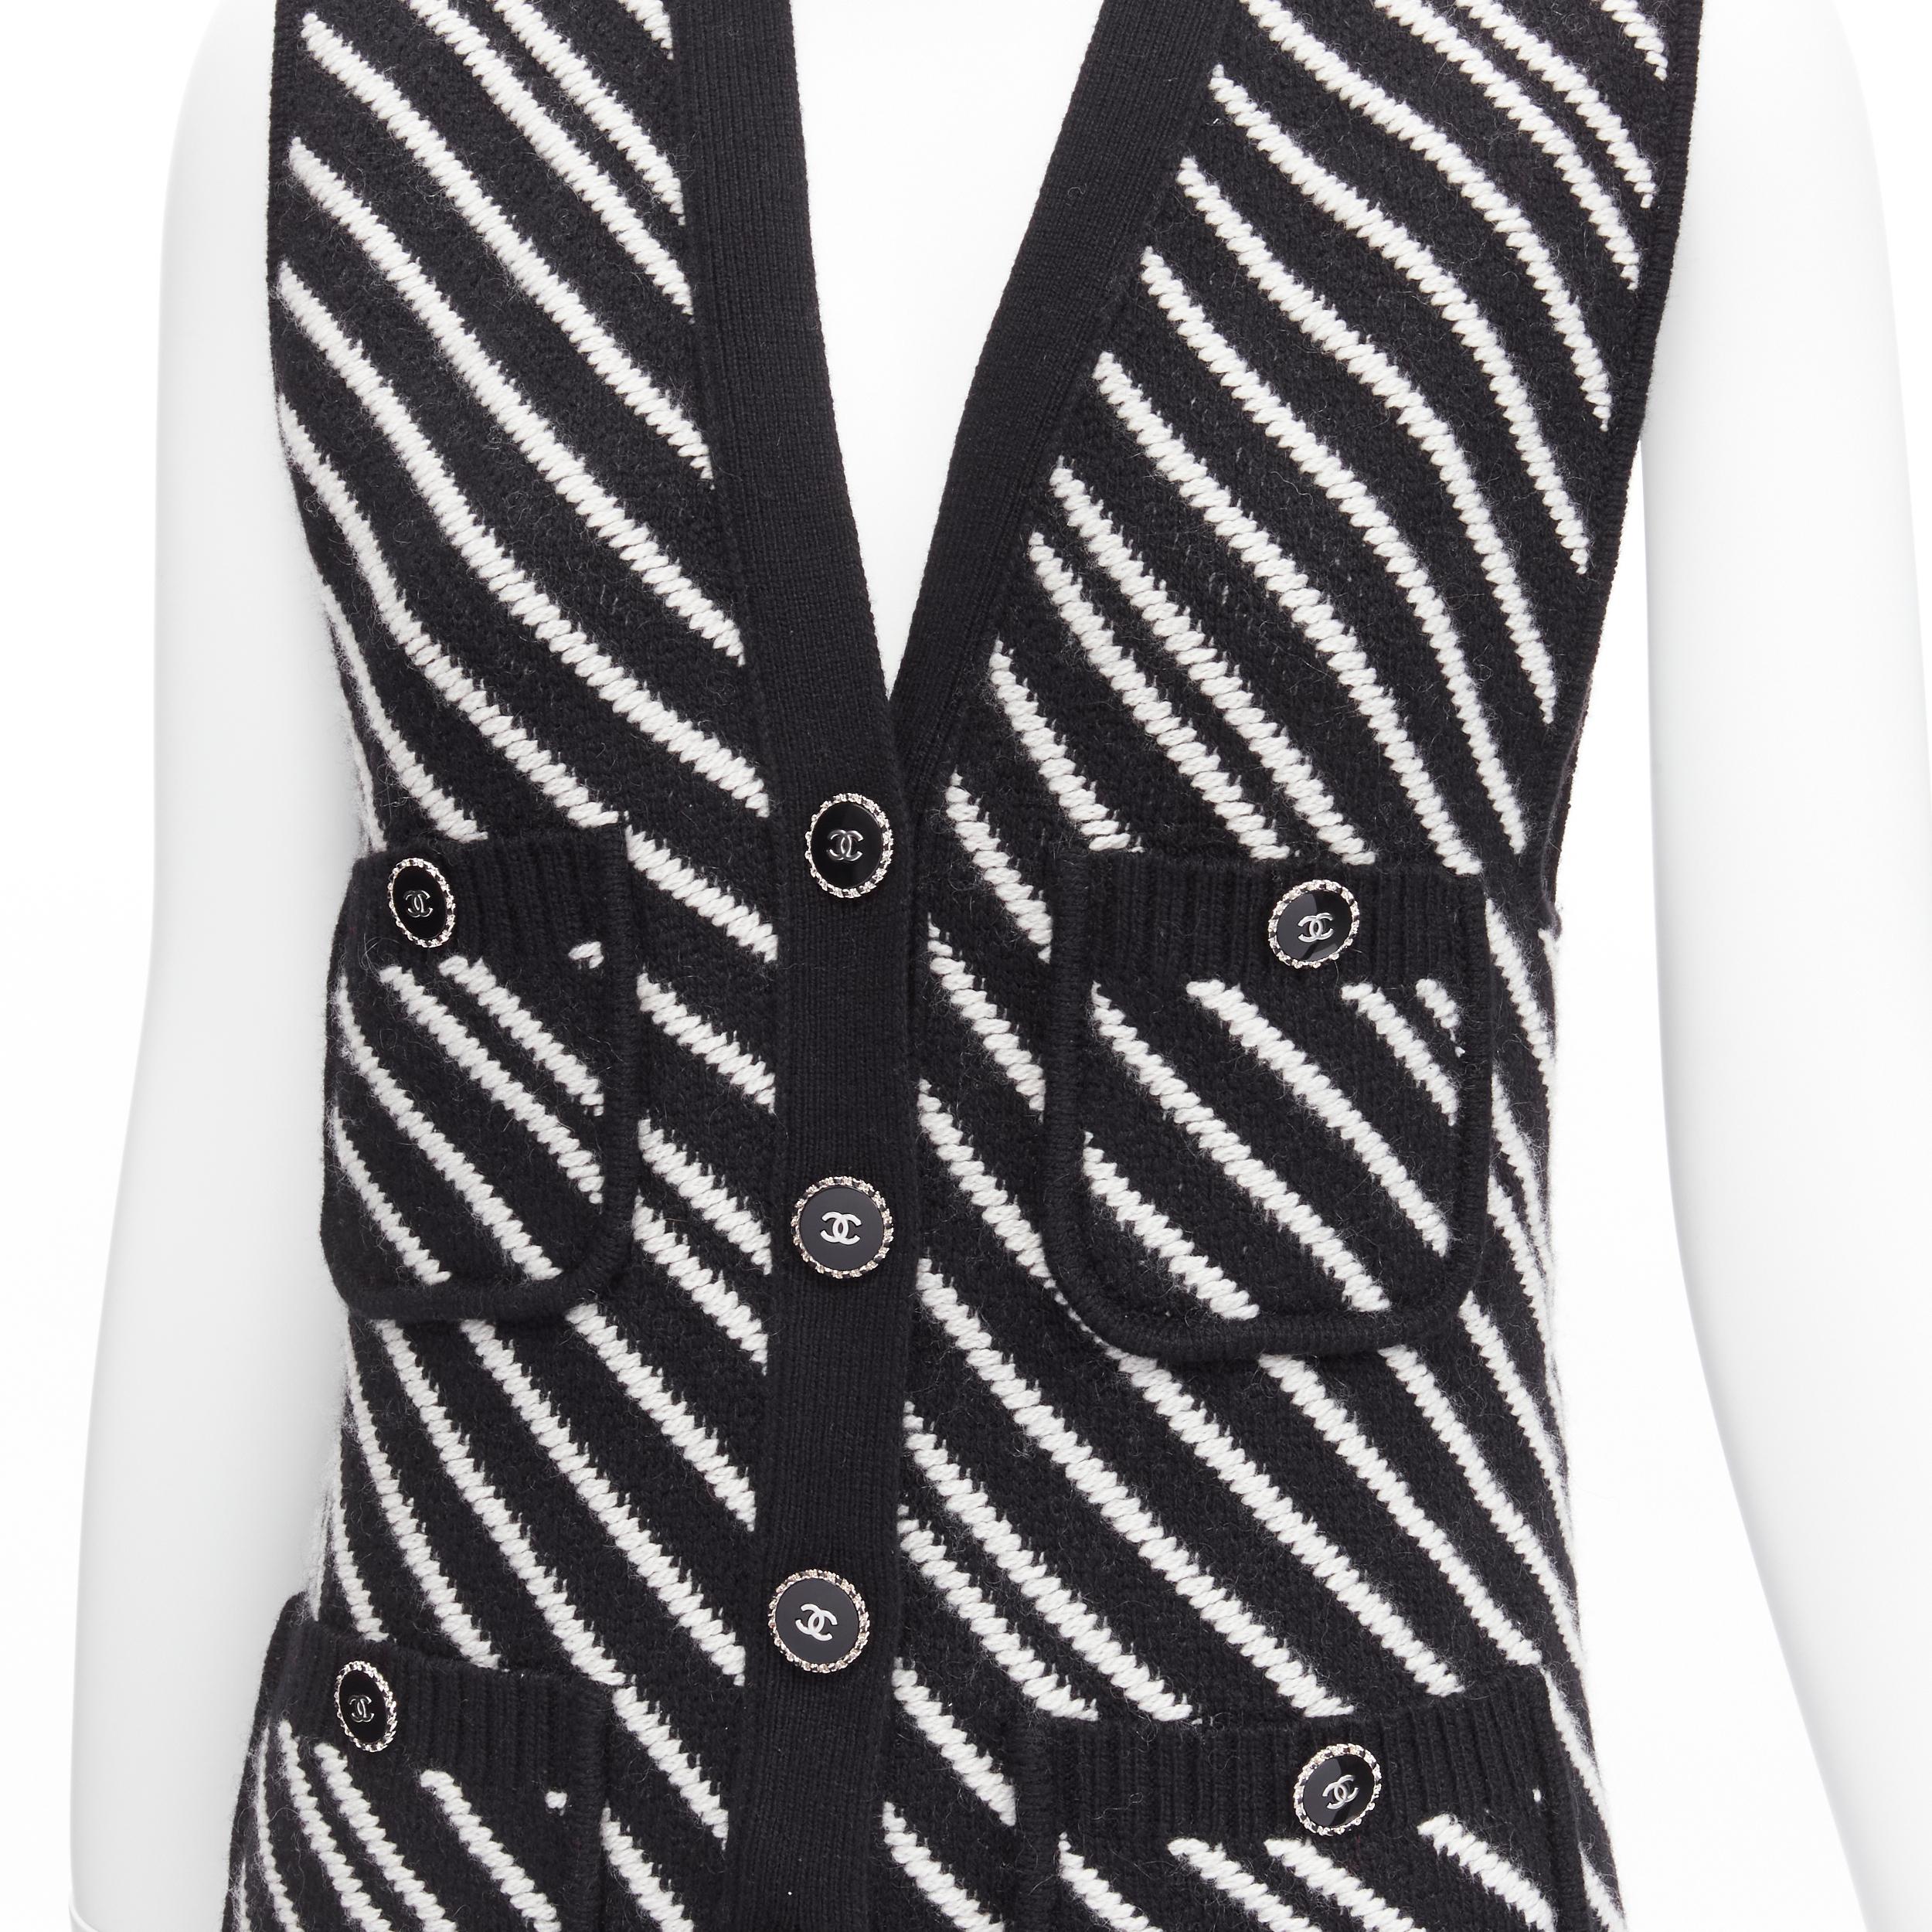 CHANEL 100% cashmere black white graphic stripes 4 pocket vest jacket FR34 XS For Sale 3